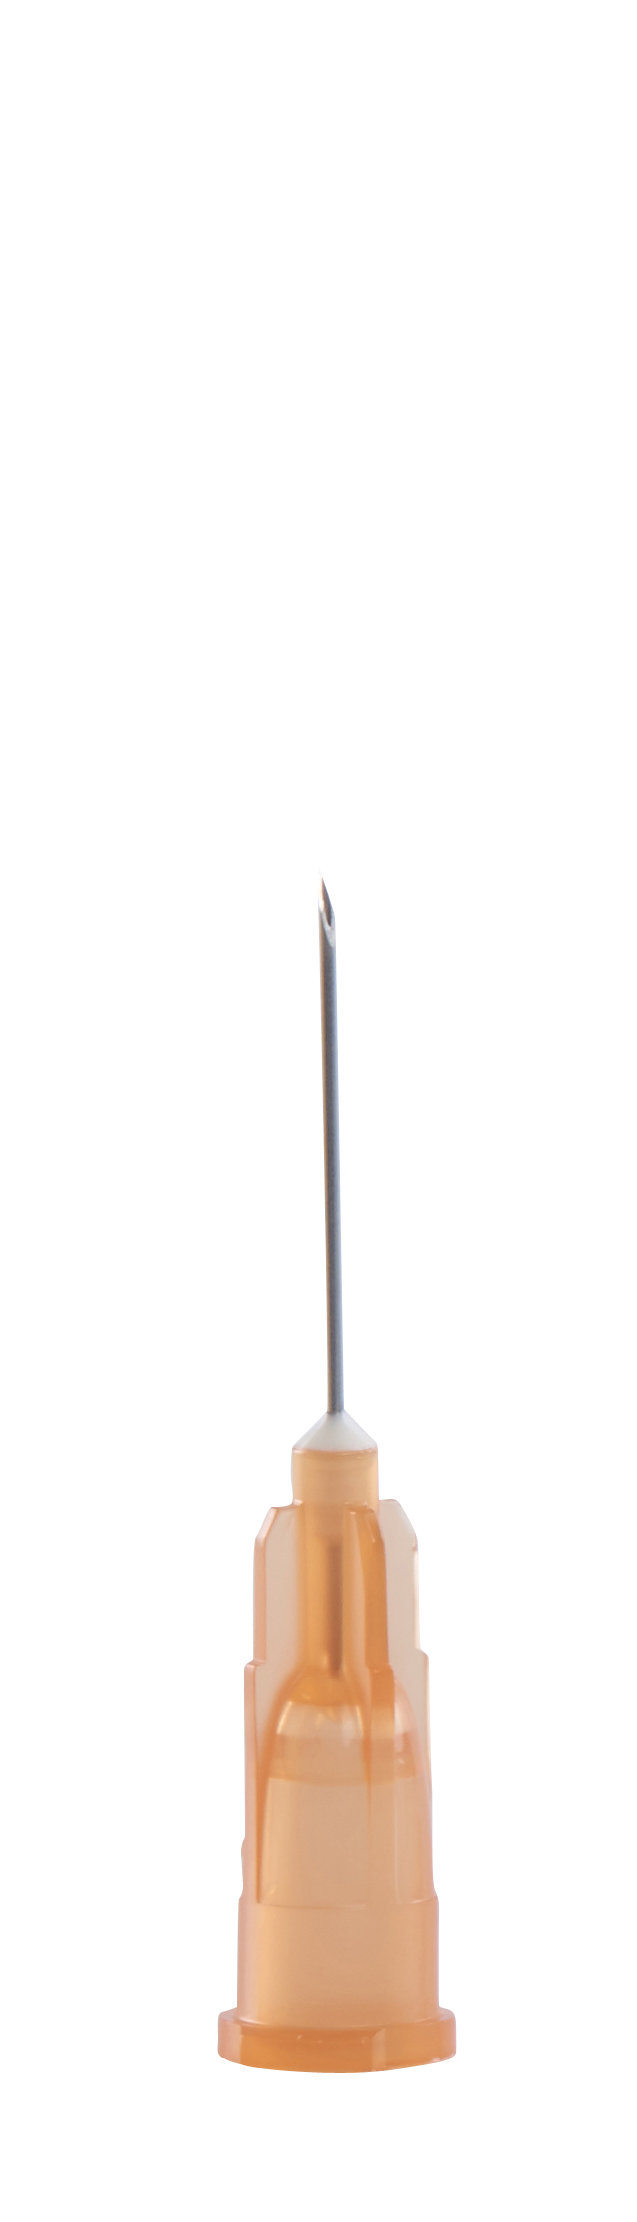 KRUUSE Disposable Needle, 0.5 x 16 mm, 25Gx5/8, orange, 100/pk